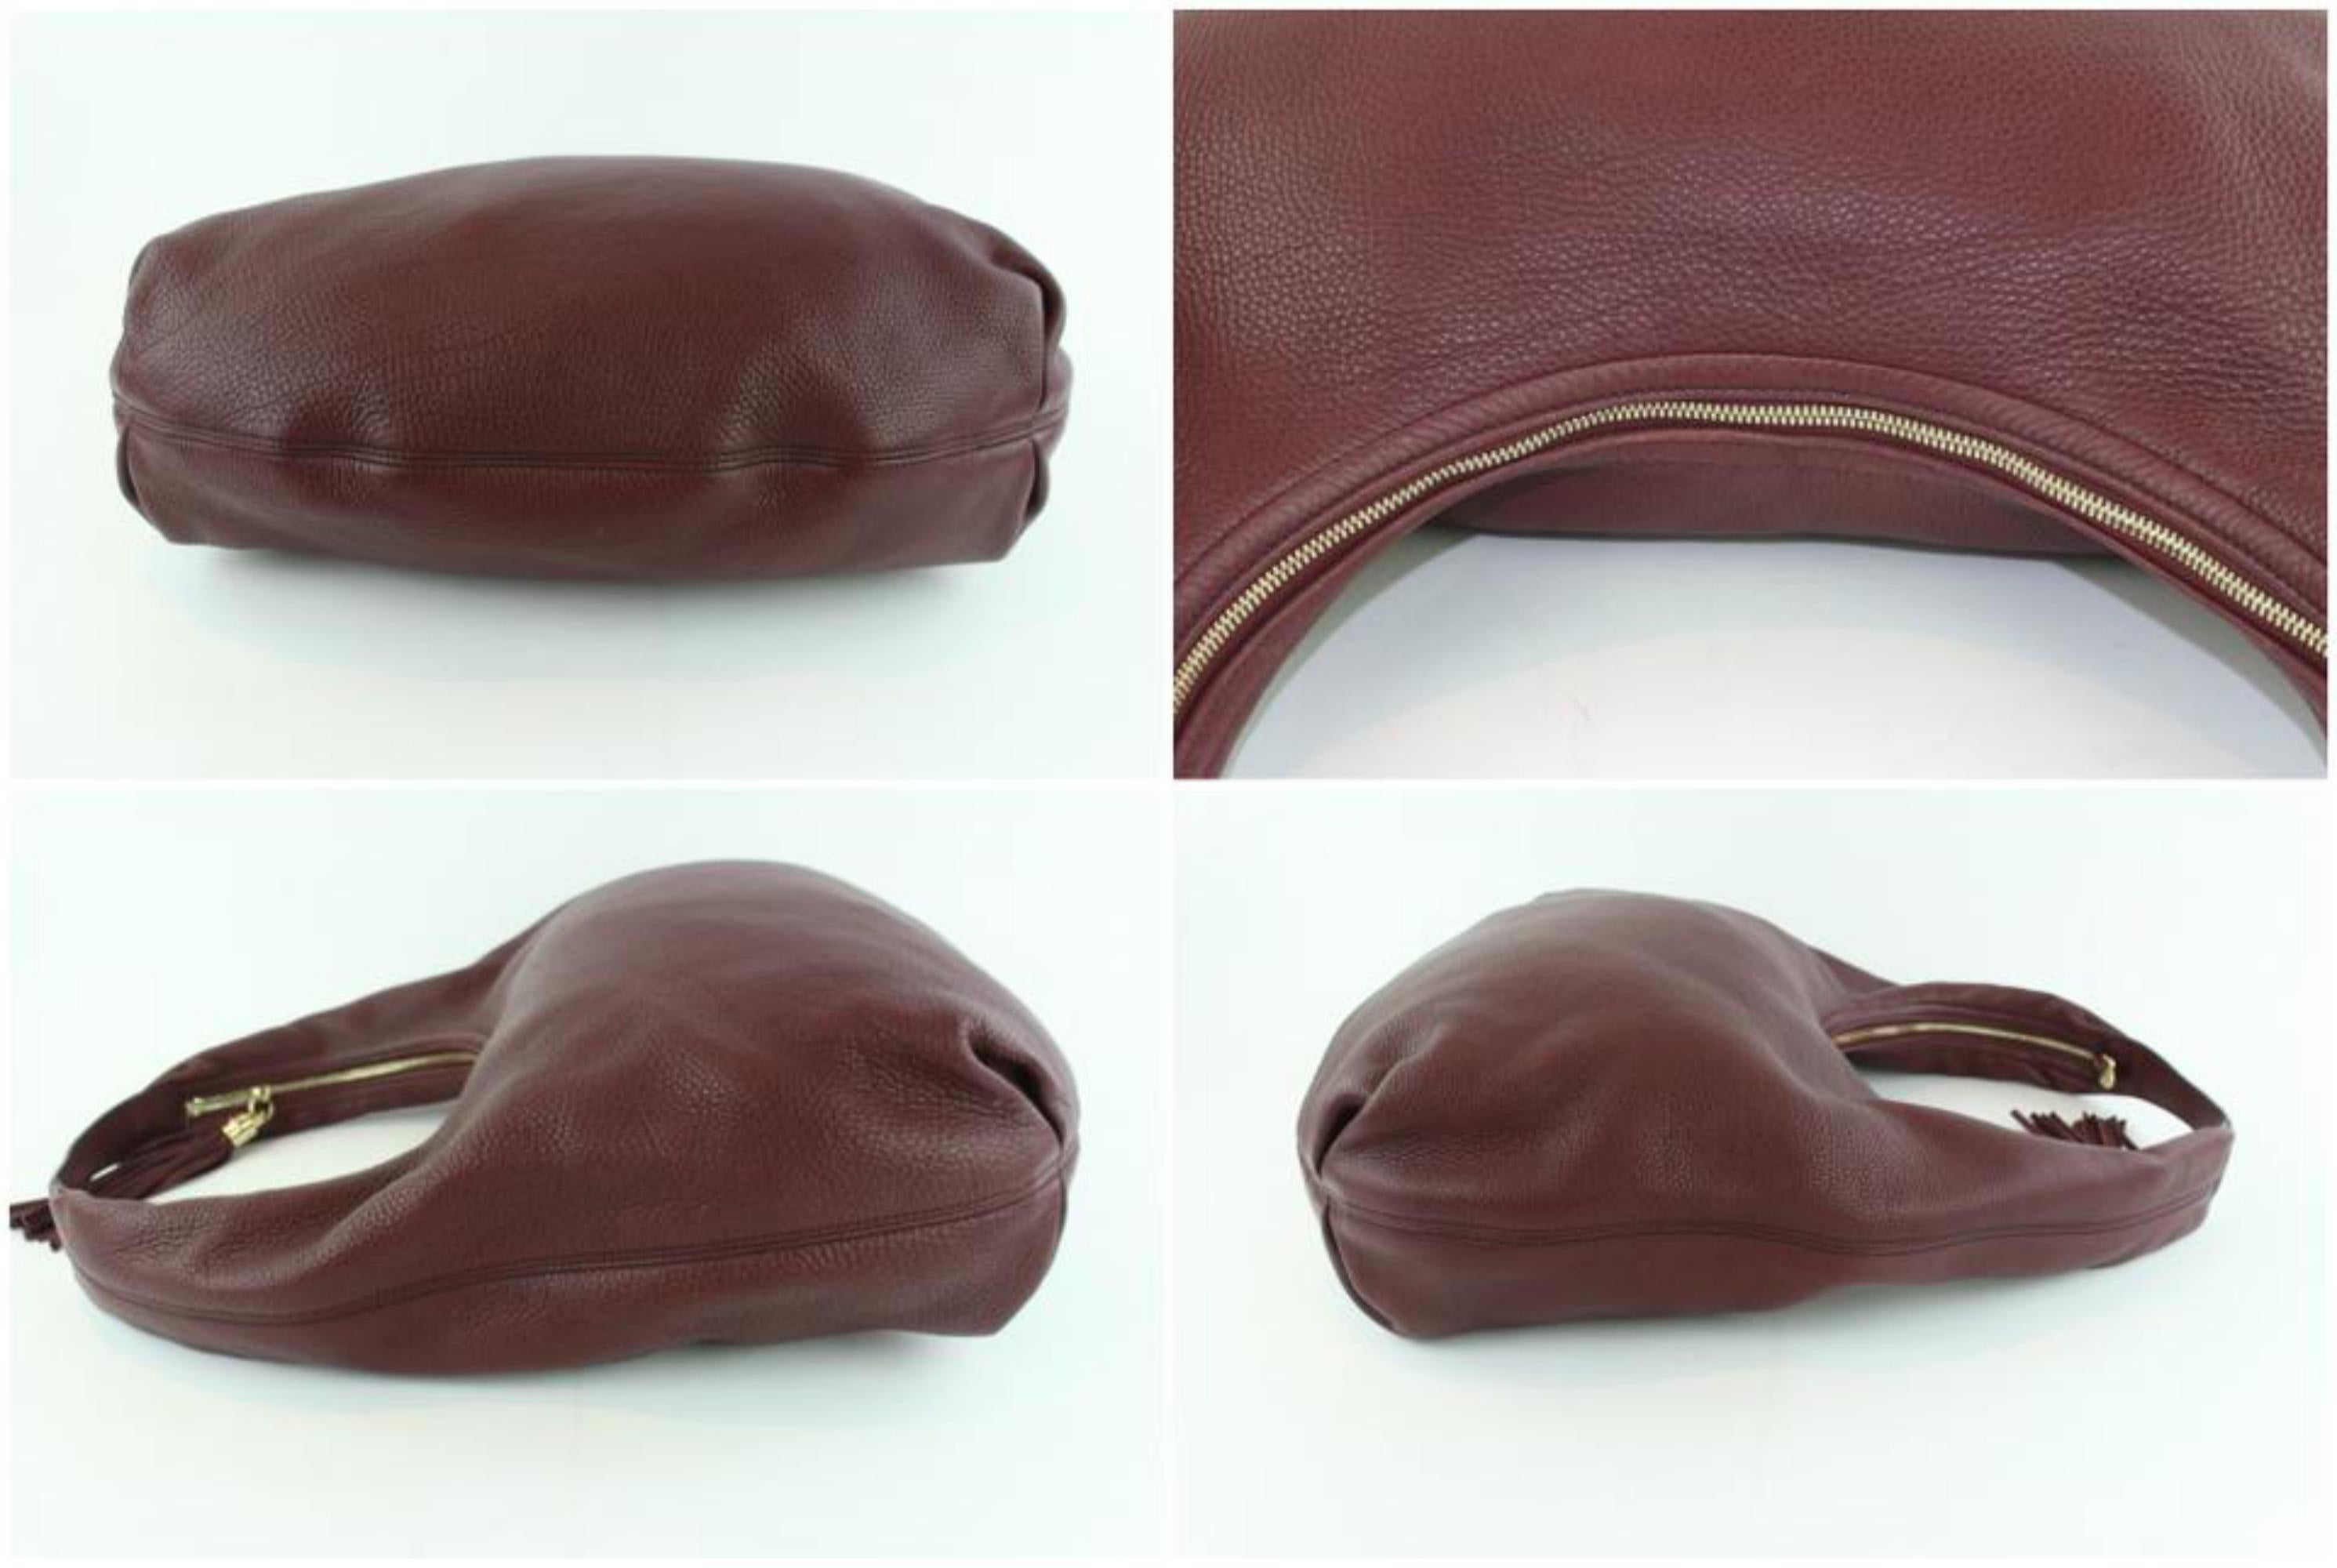 Gucci Soho Large Pebbled Calfskin 17gz1102 Burgundy Leather Hobo Bag For Sale 2